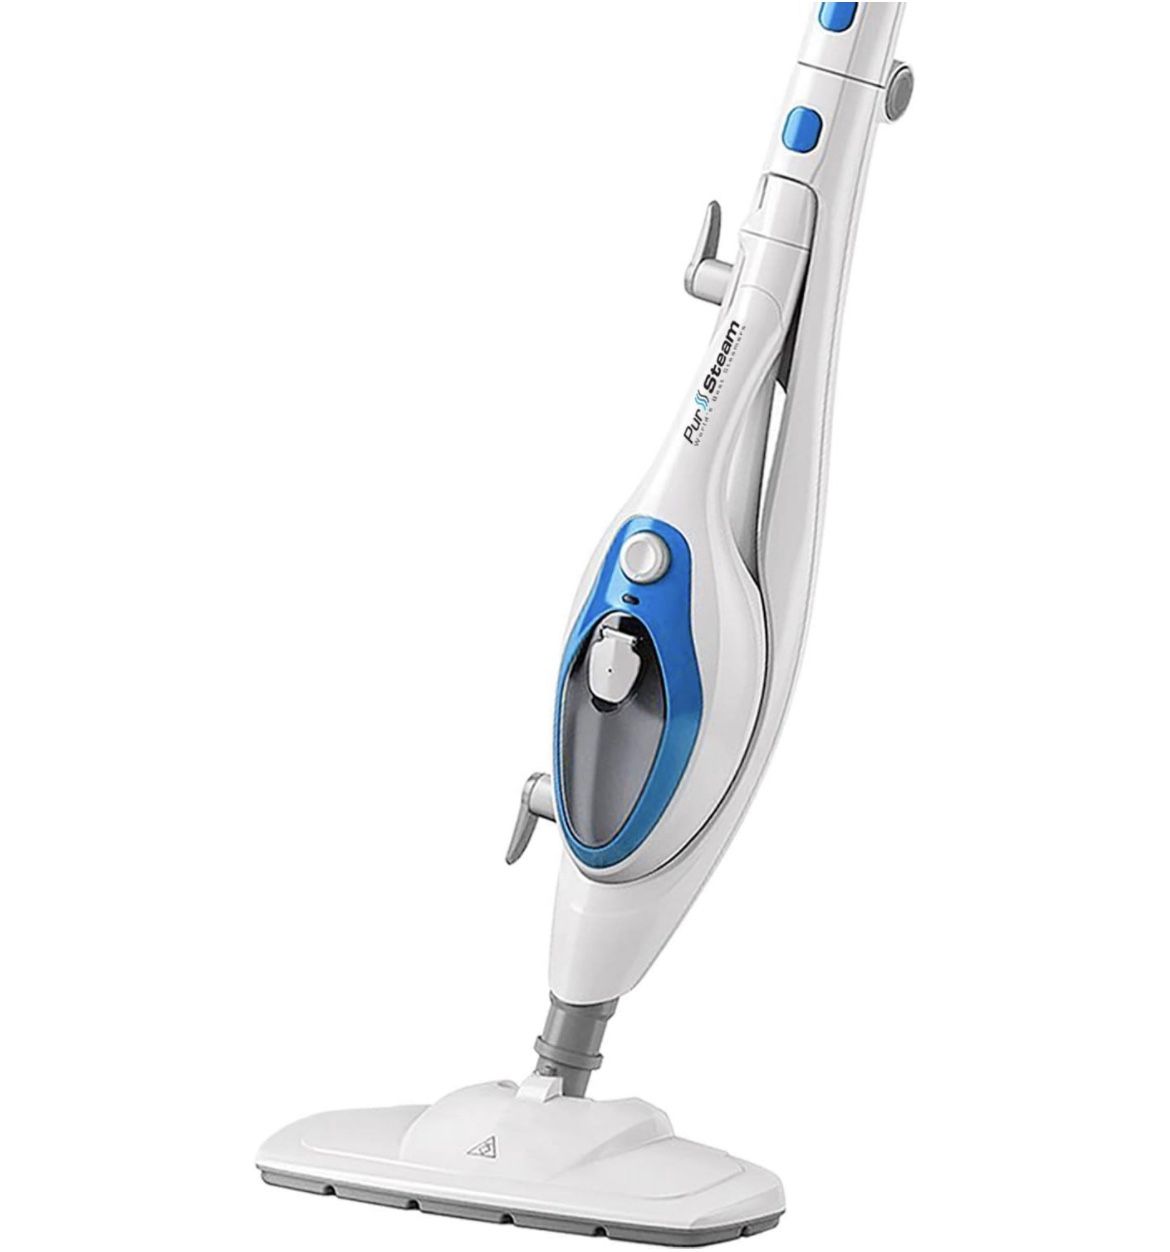 PurSteam Steam Mop Cleaner 10-in-1 with Convenient Detachable Handheld Unit -792